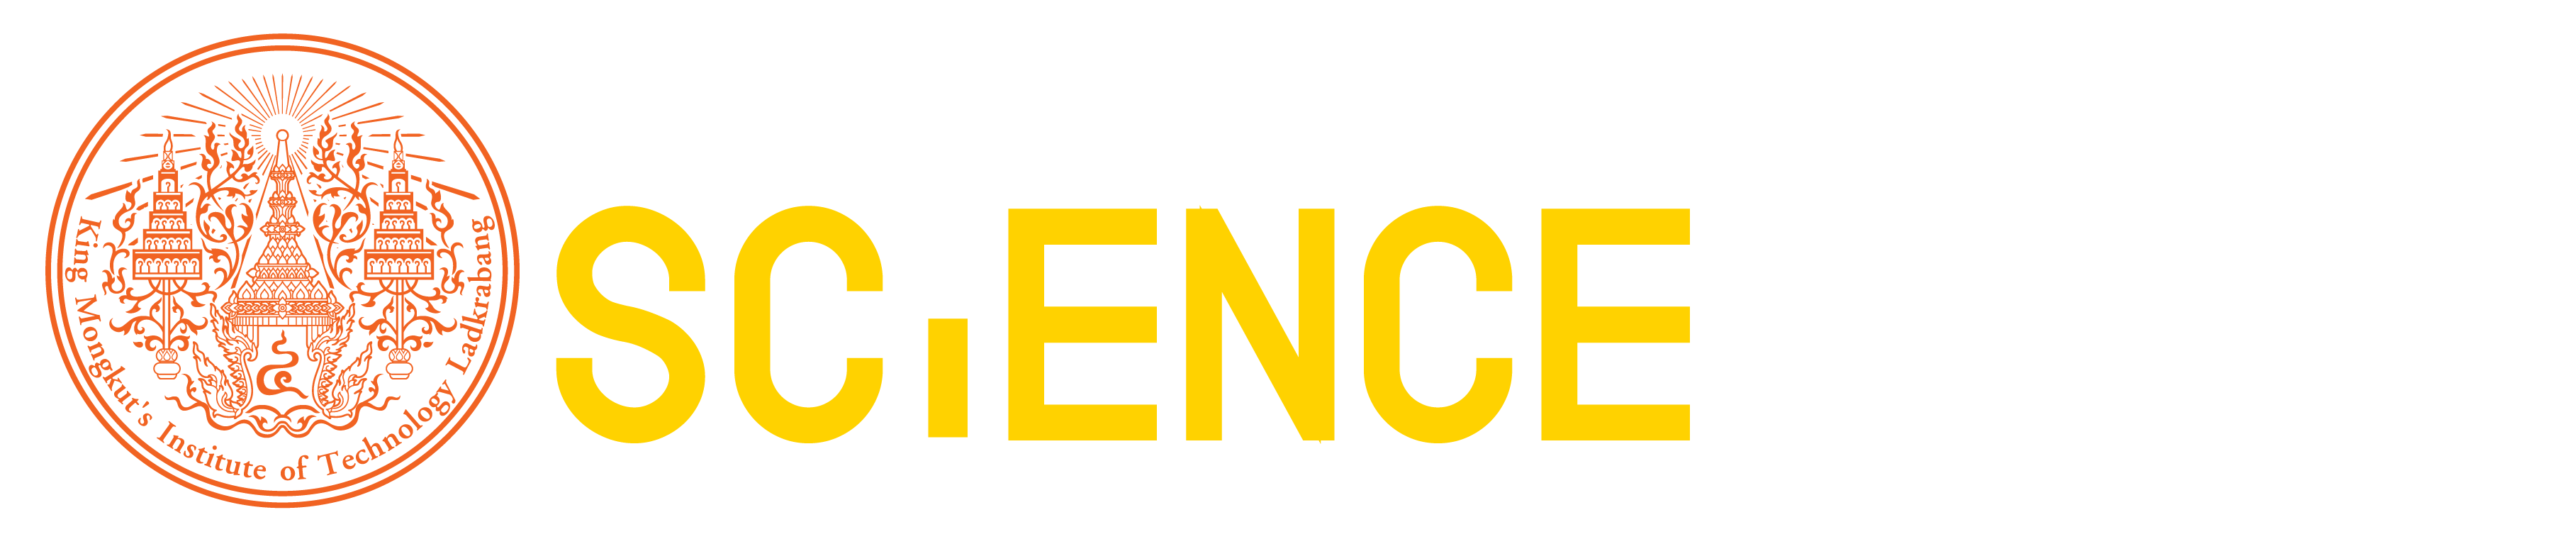 Science KMITL Logo